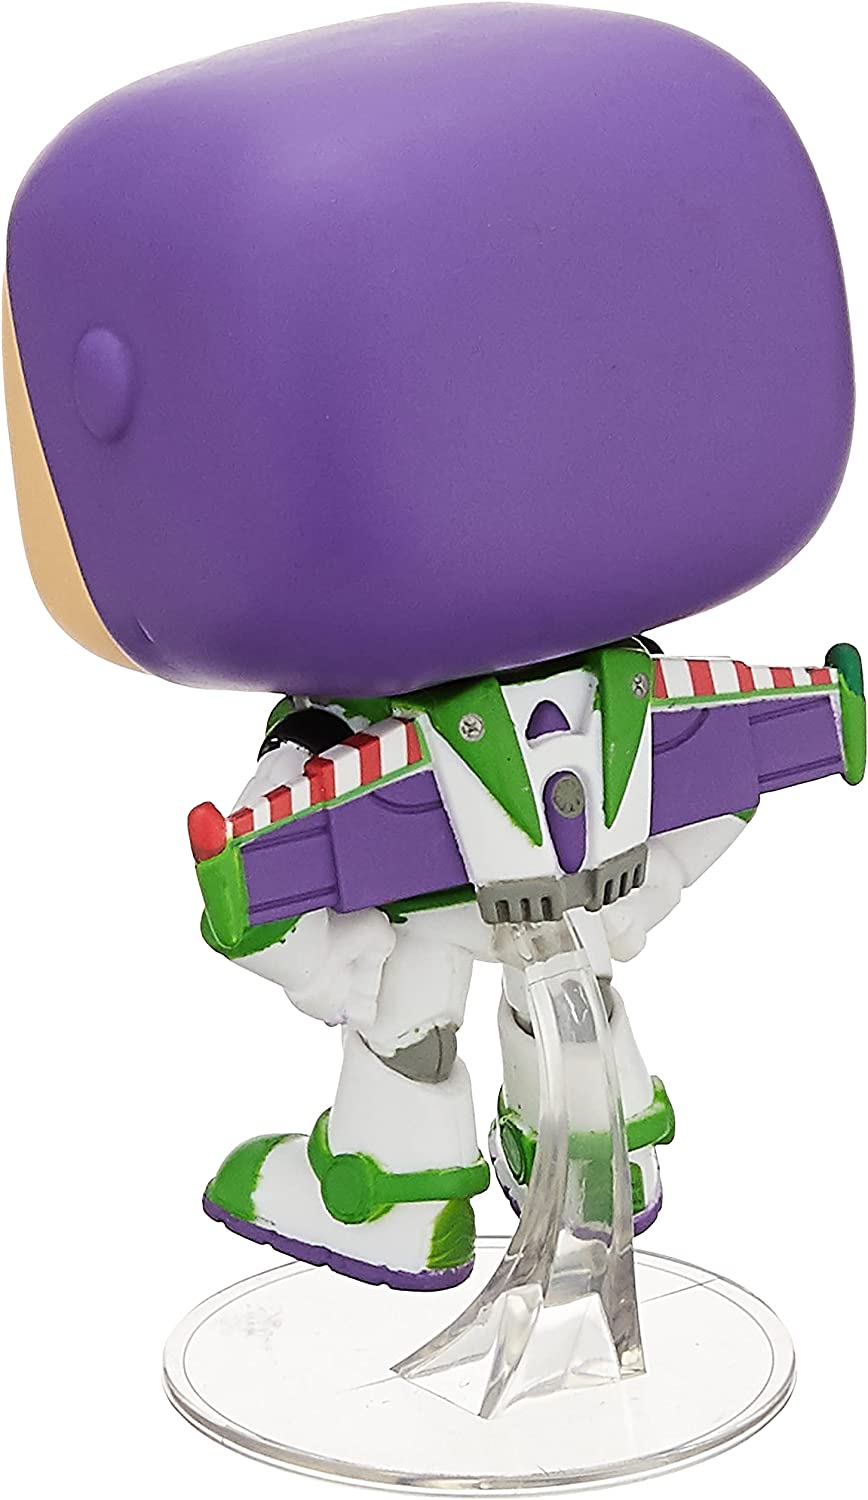 Funko Pop! Disney: Toy Story 4 - Buzz Lightyear Floating Amazon Exclusive